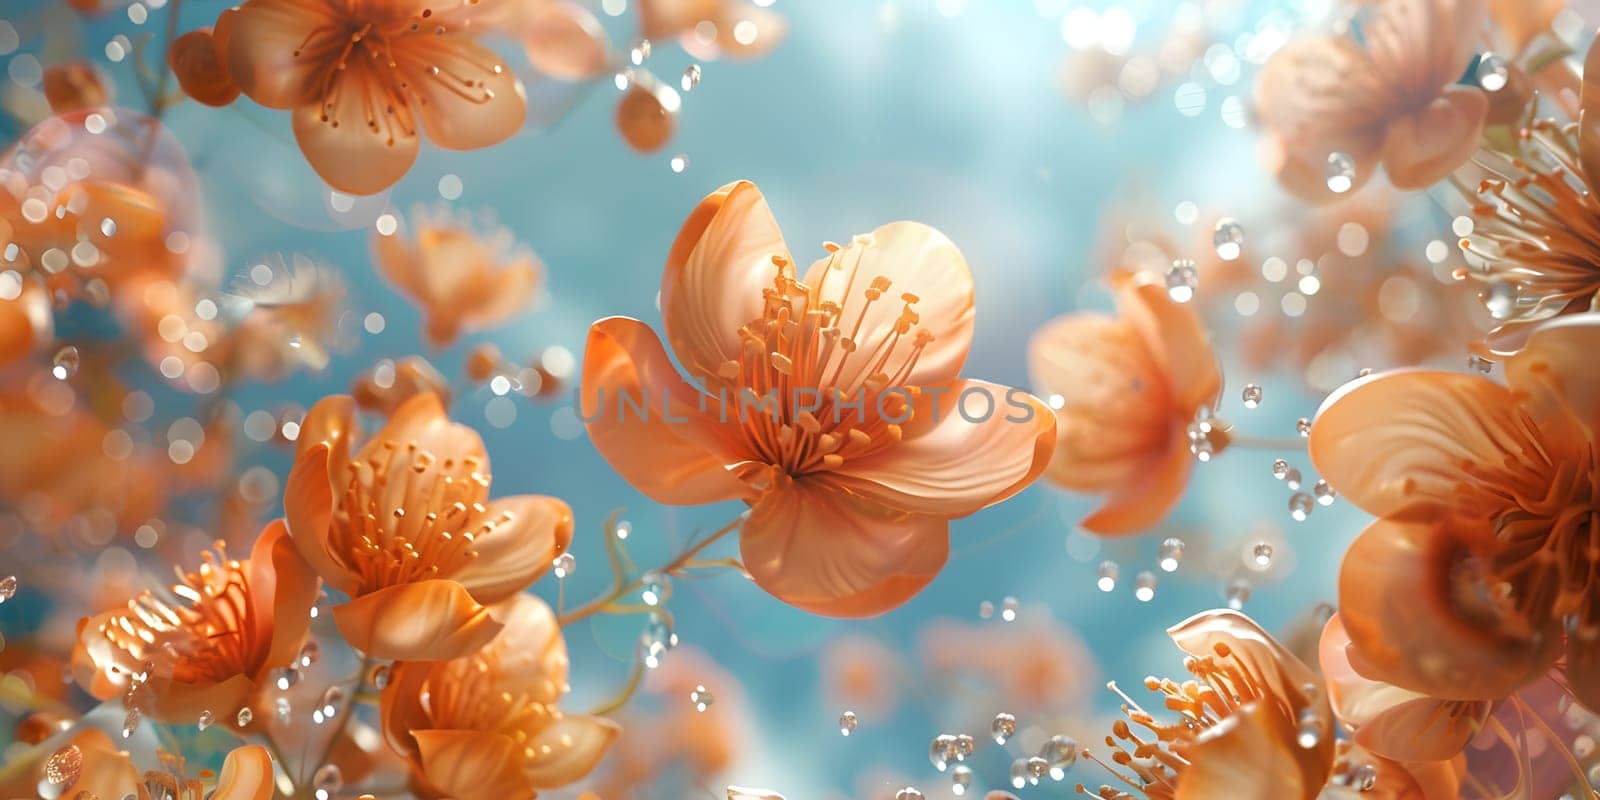 Colorful flowers, such as orange petals, gracefully floating underwater alongside marine invertebrates, creating a beautiful scene of marine biology